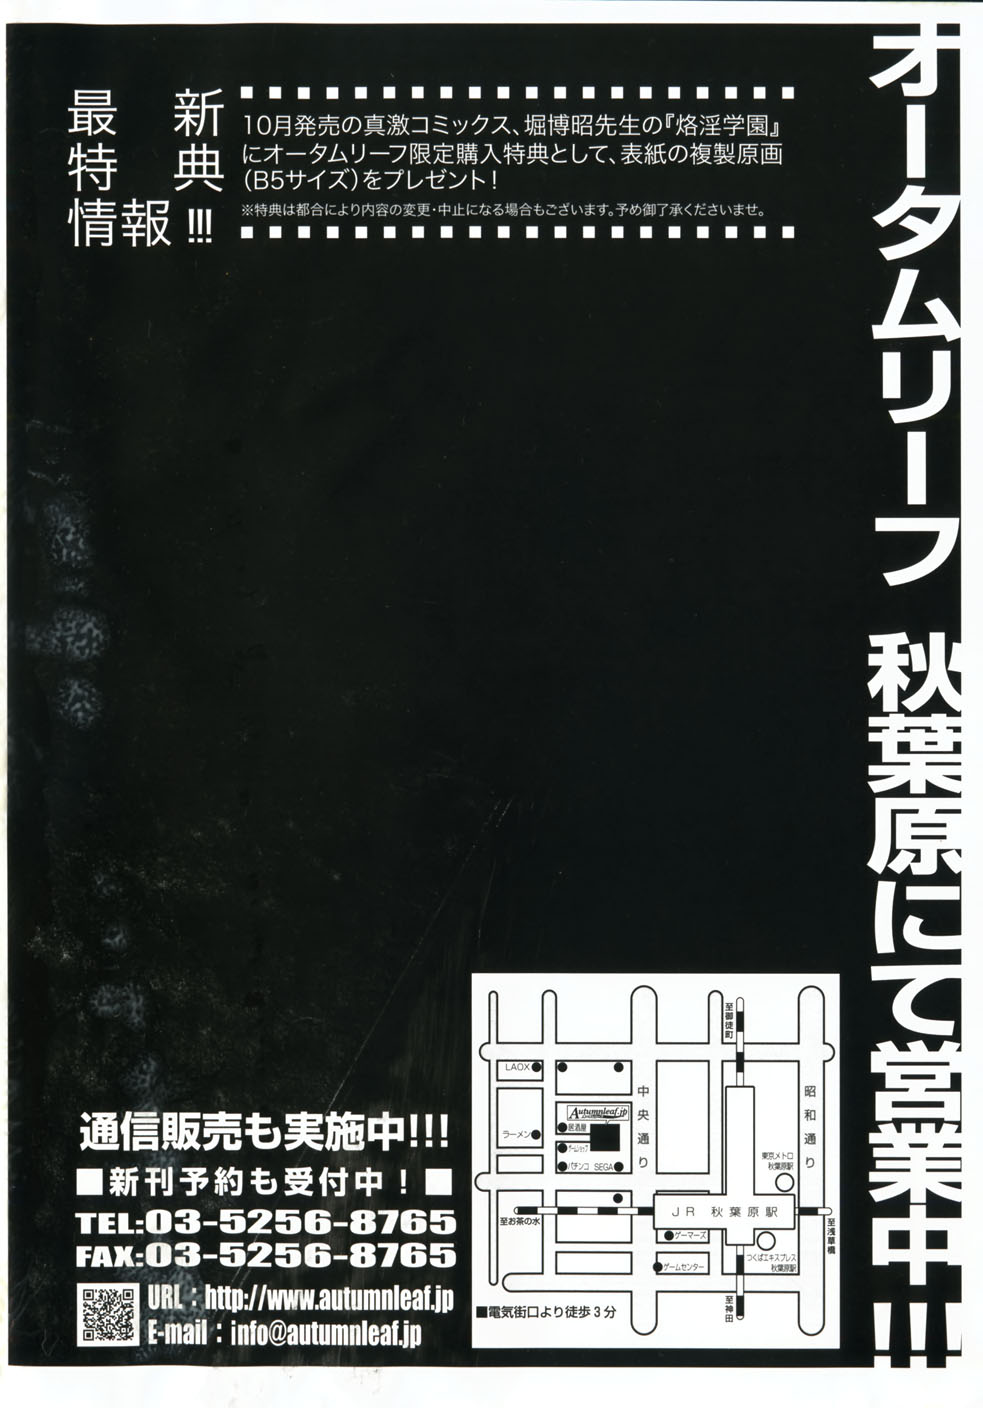 Comic Shingeki 2007.11 Vol.50 